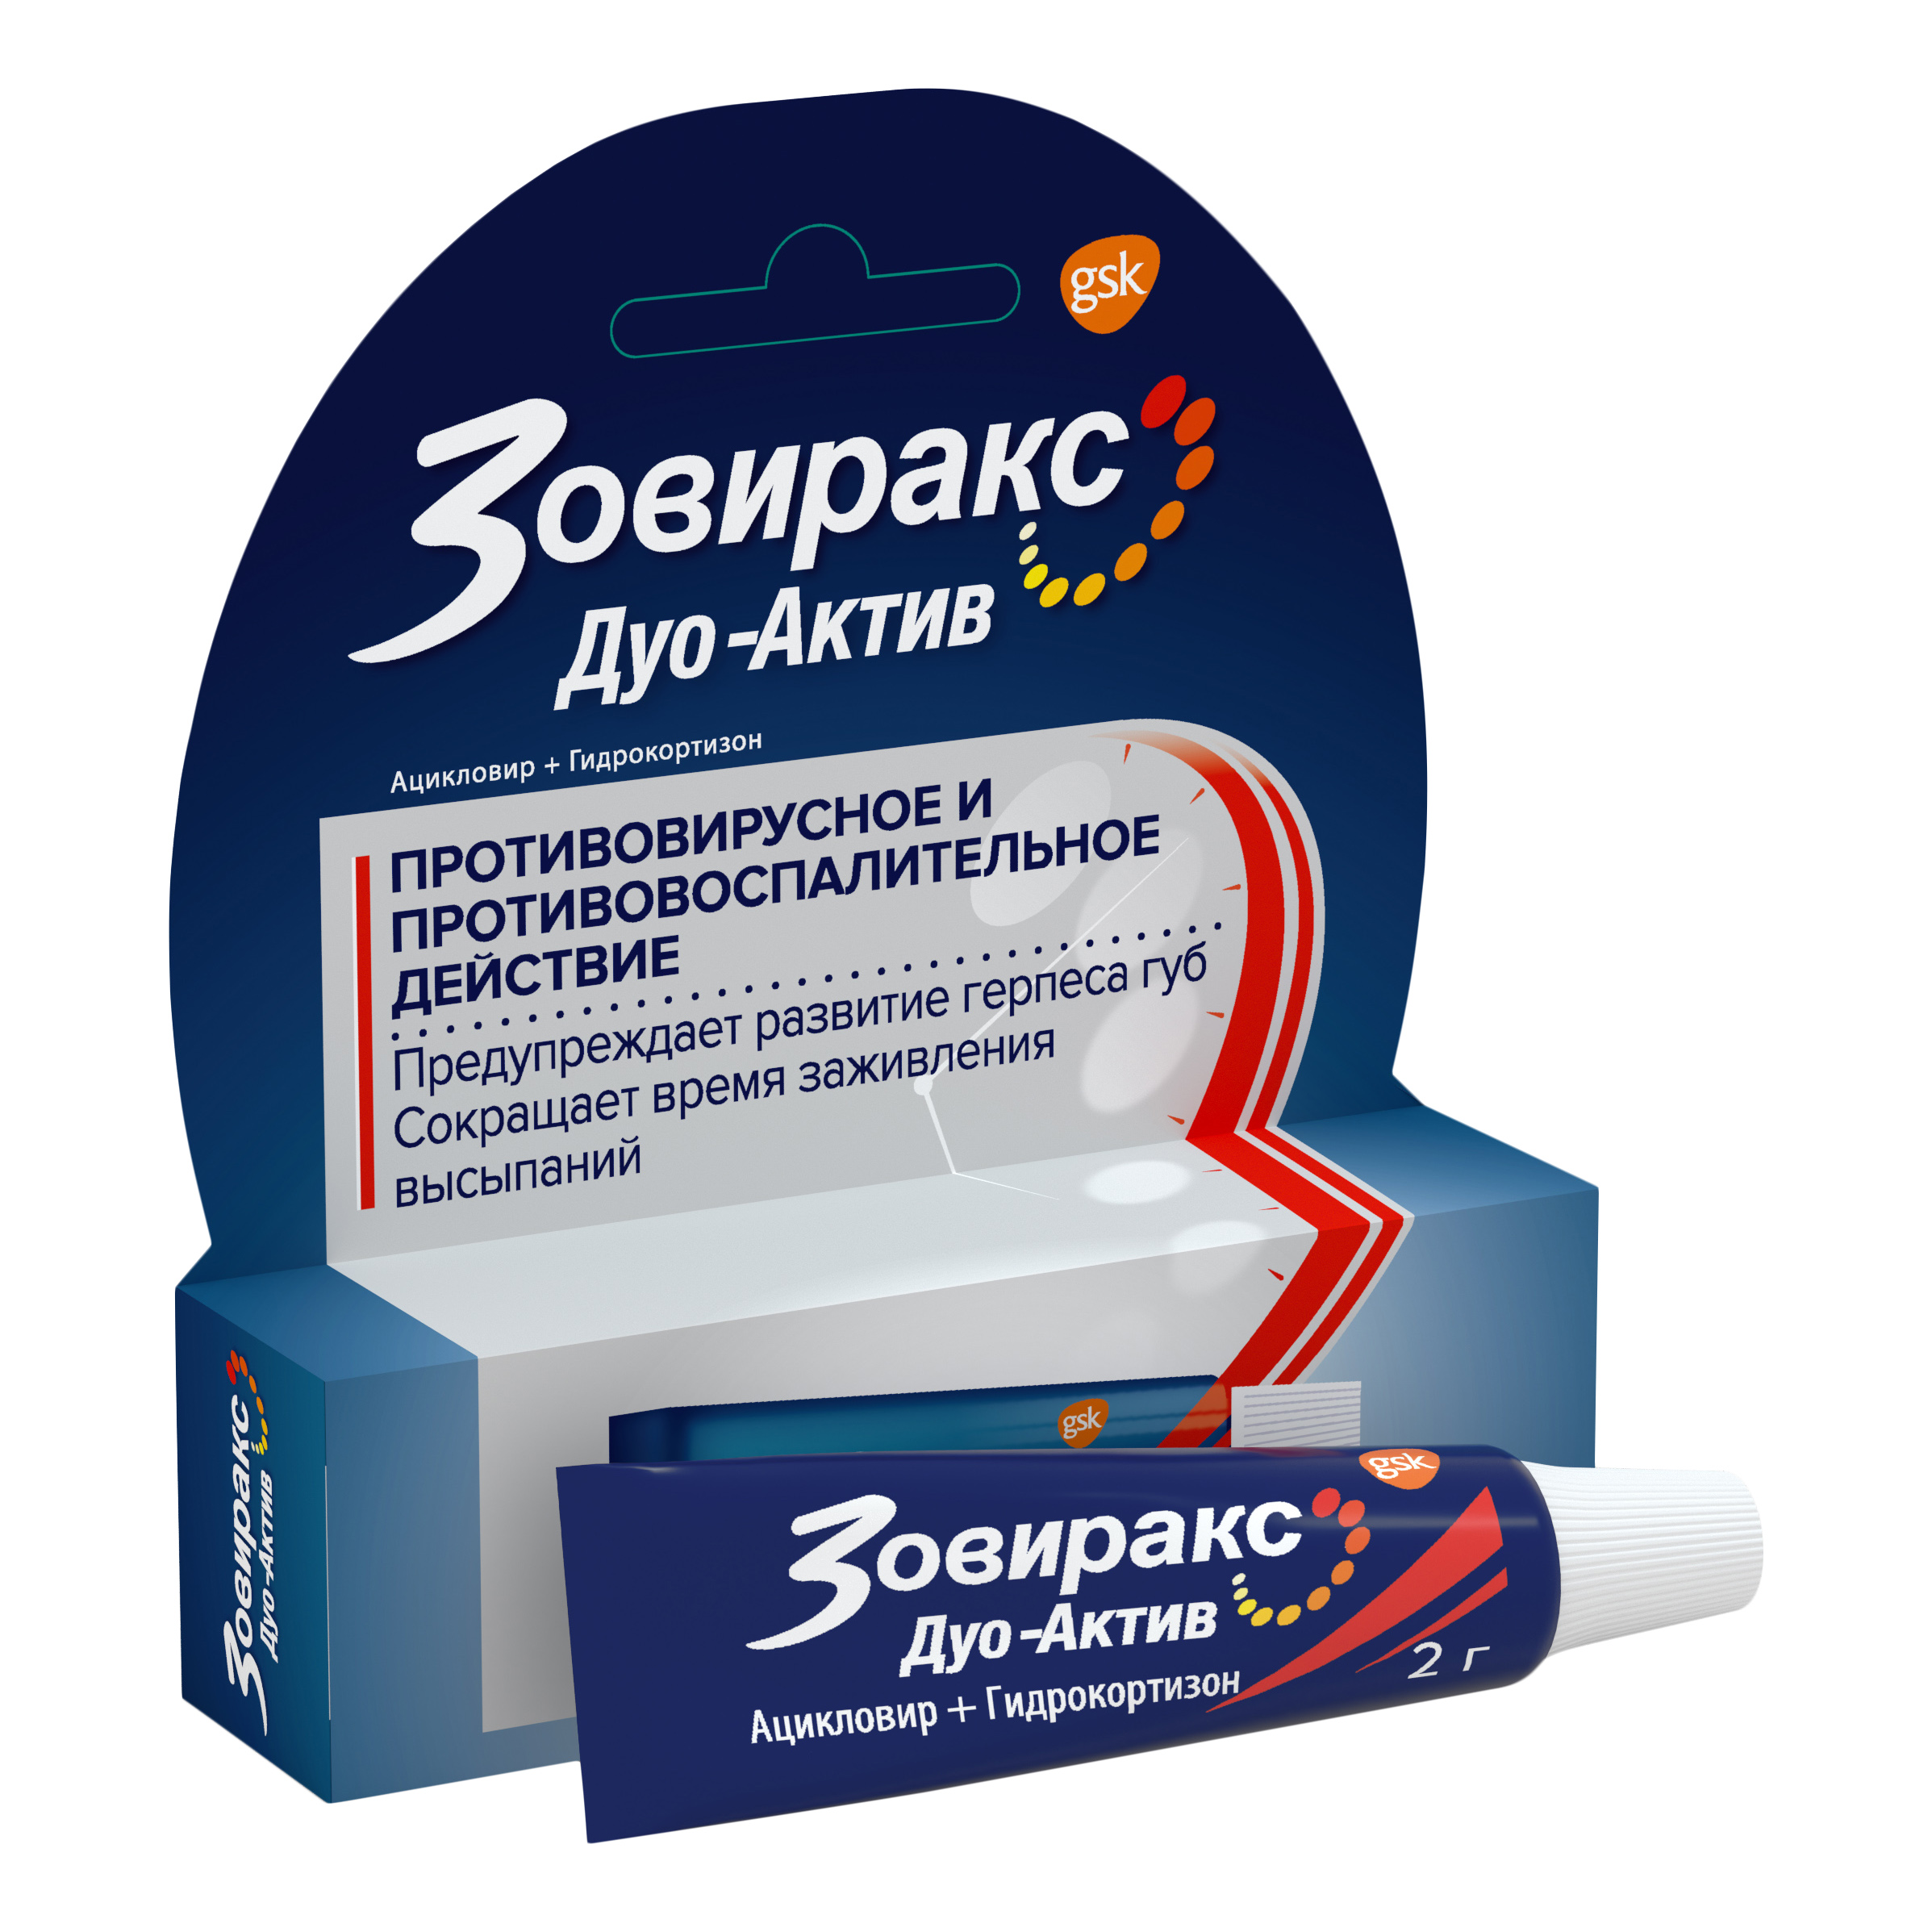 Зовиракс ДУО-АКТИВ крем от простуды на губах, противовирусное средство, ацикловир+гидрокортизон, 2 г аптека ацикловир сандоз крем 5% 5г